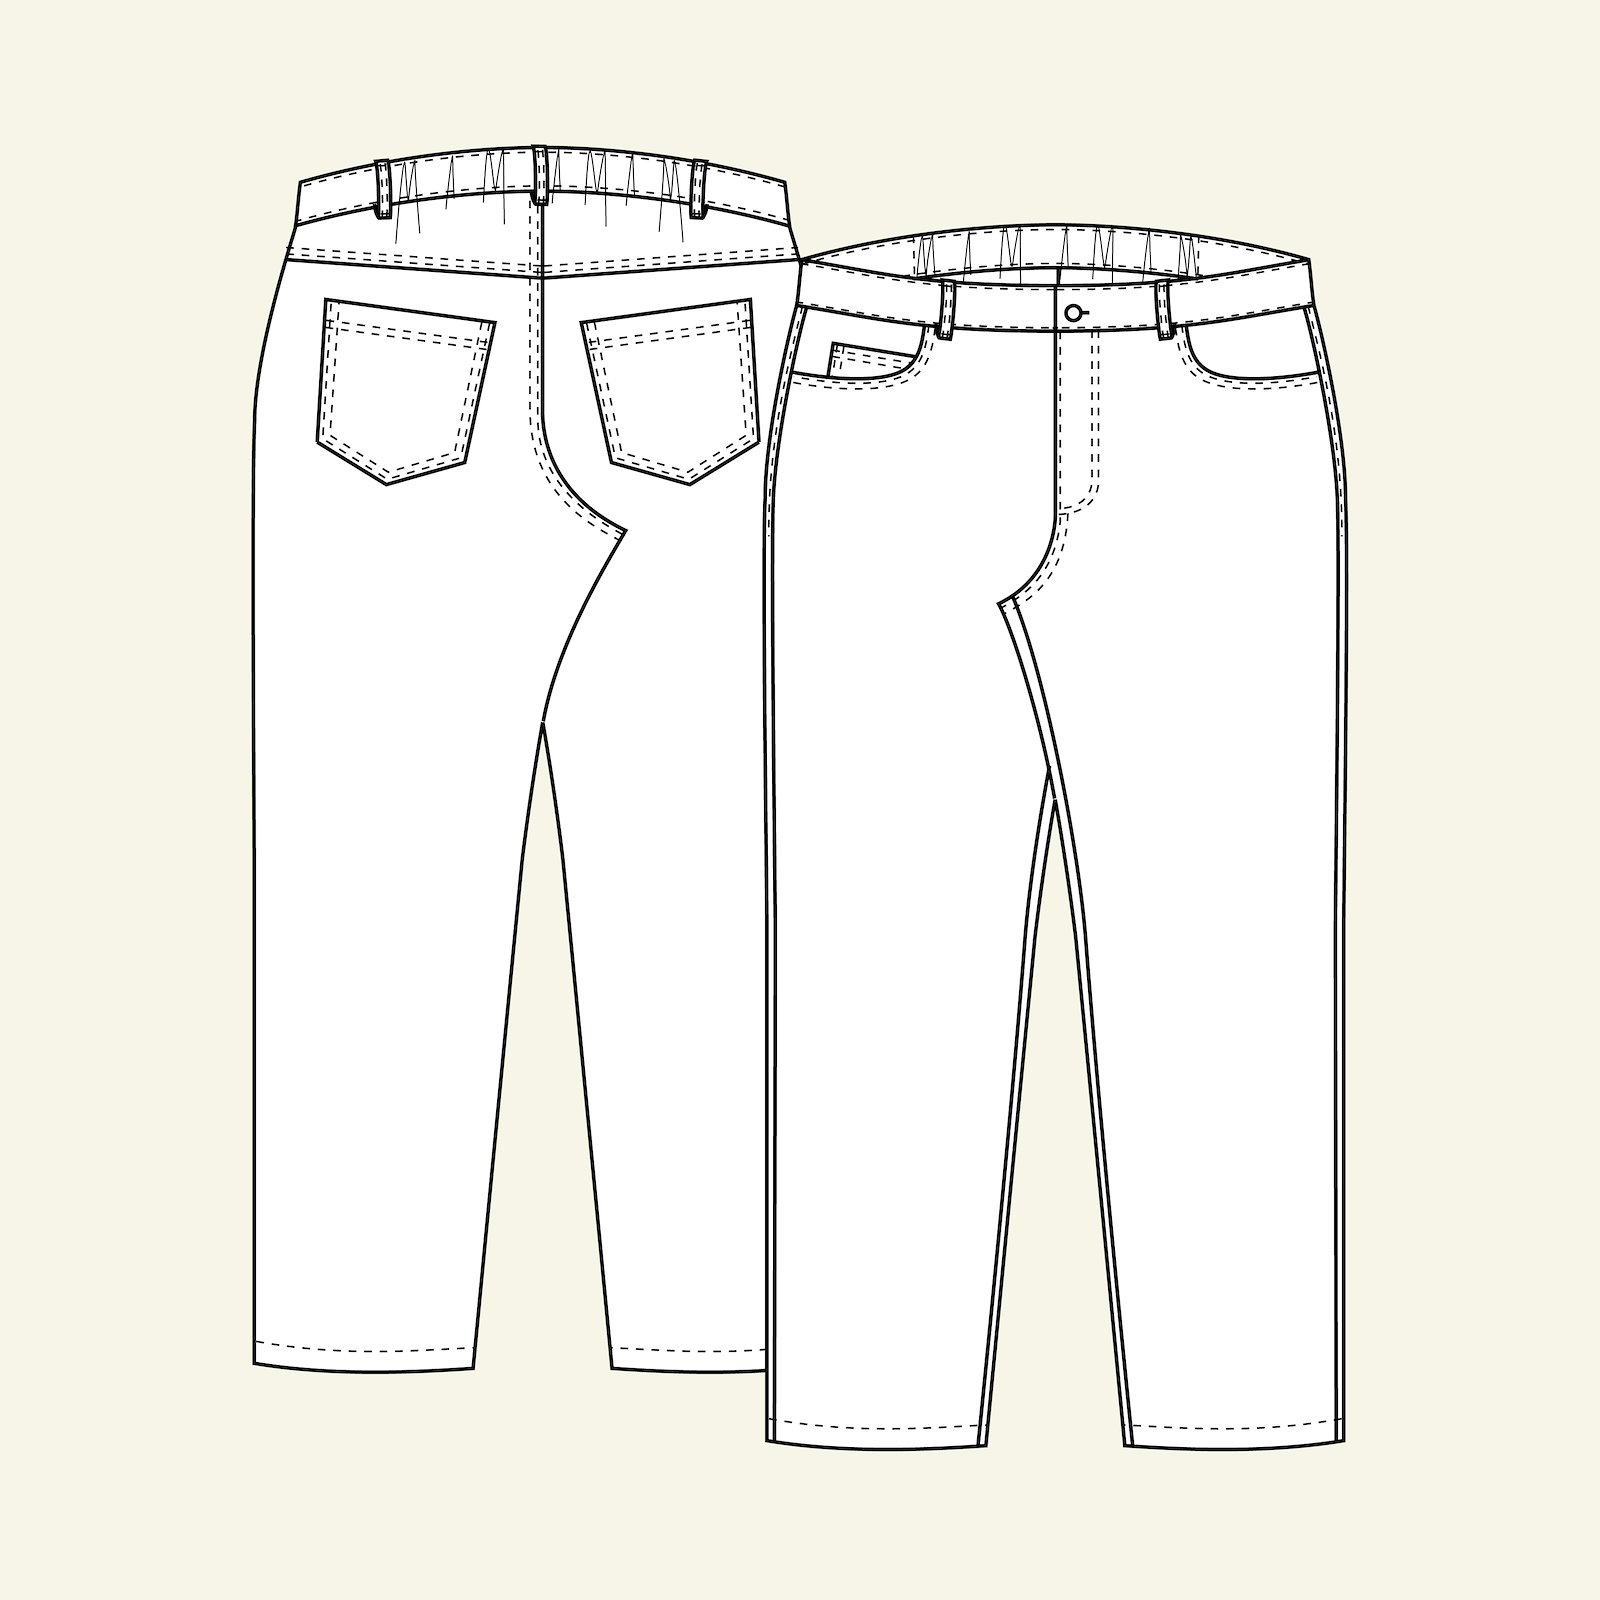 Klassisk jeans med resårlinning bak, 50 p70007000_p70007001_p70007002_p70007003_p70007004_pack_b